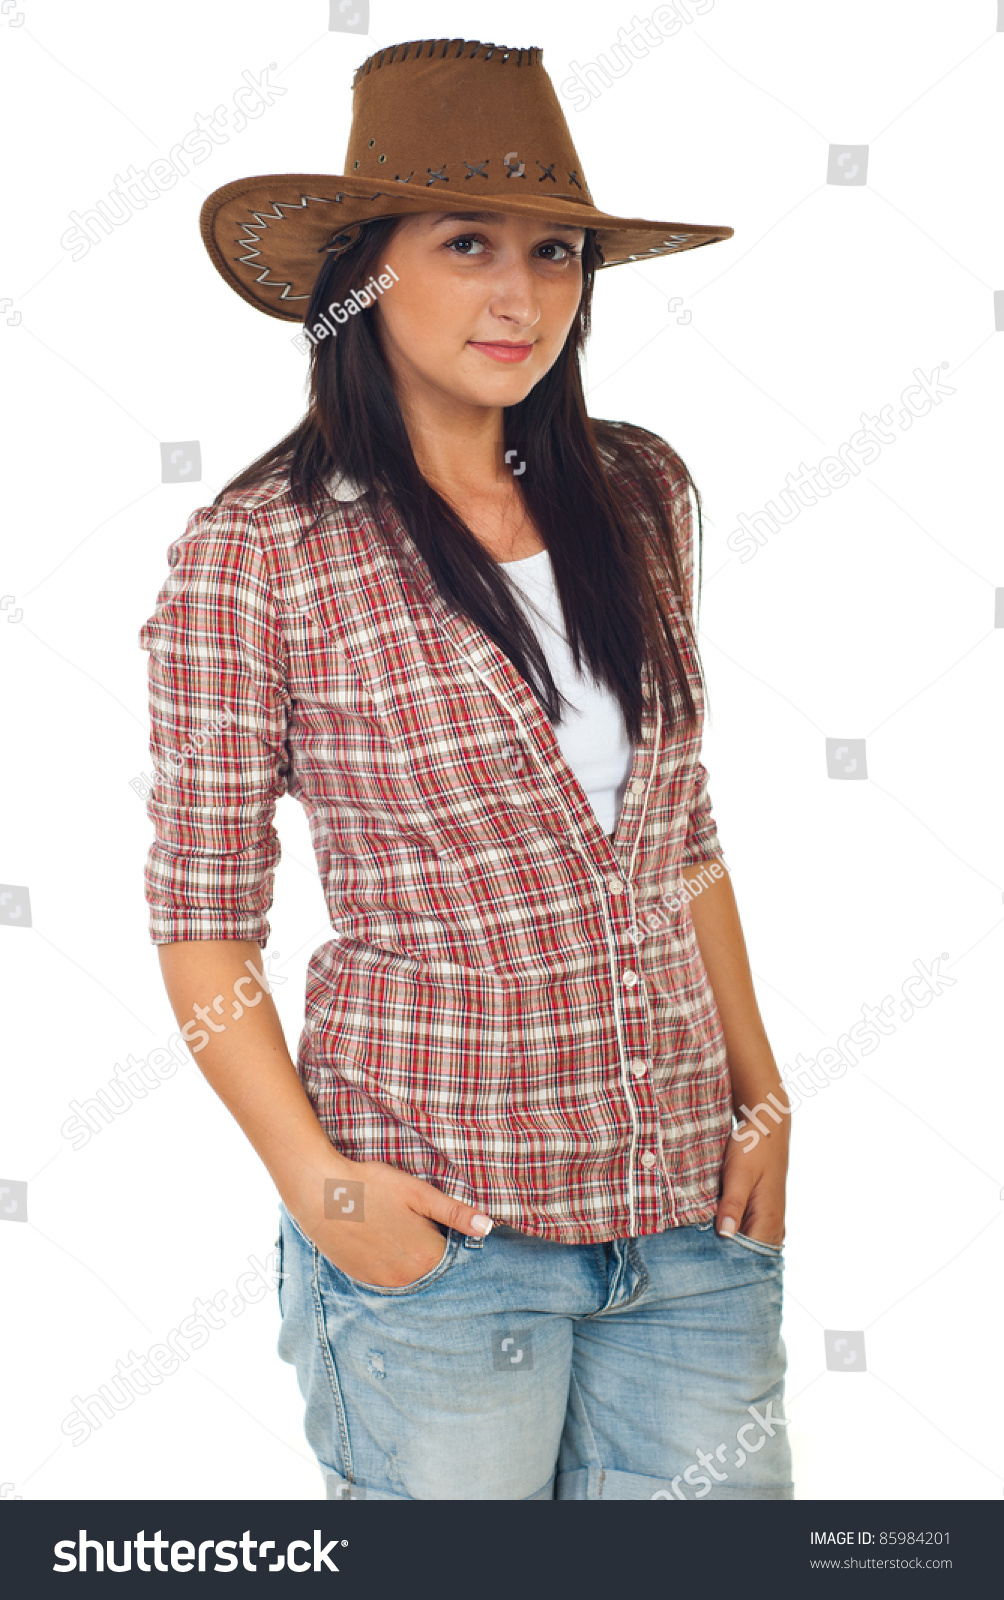 cowboy outfit women